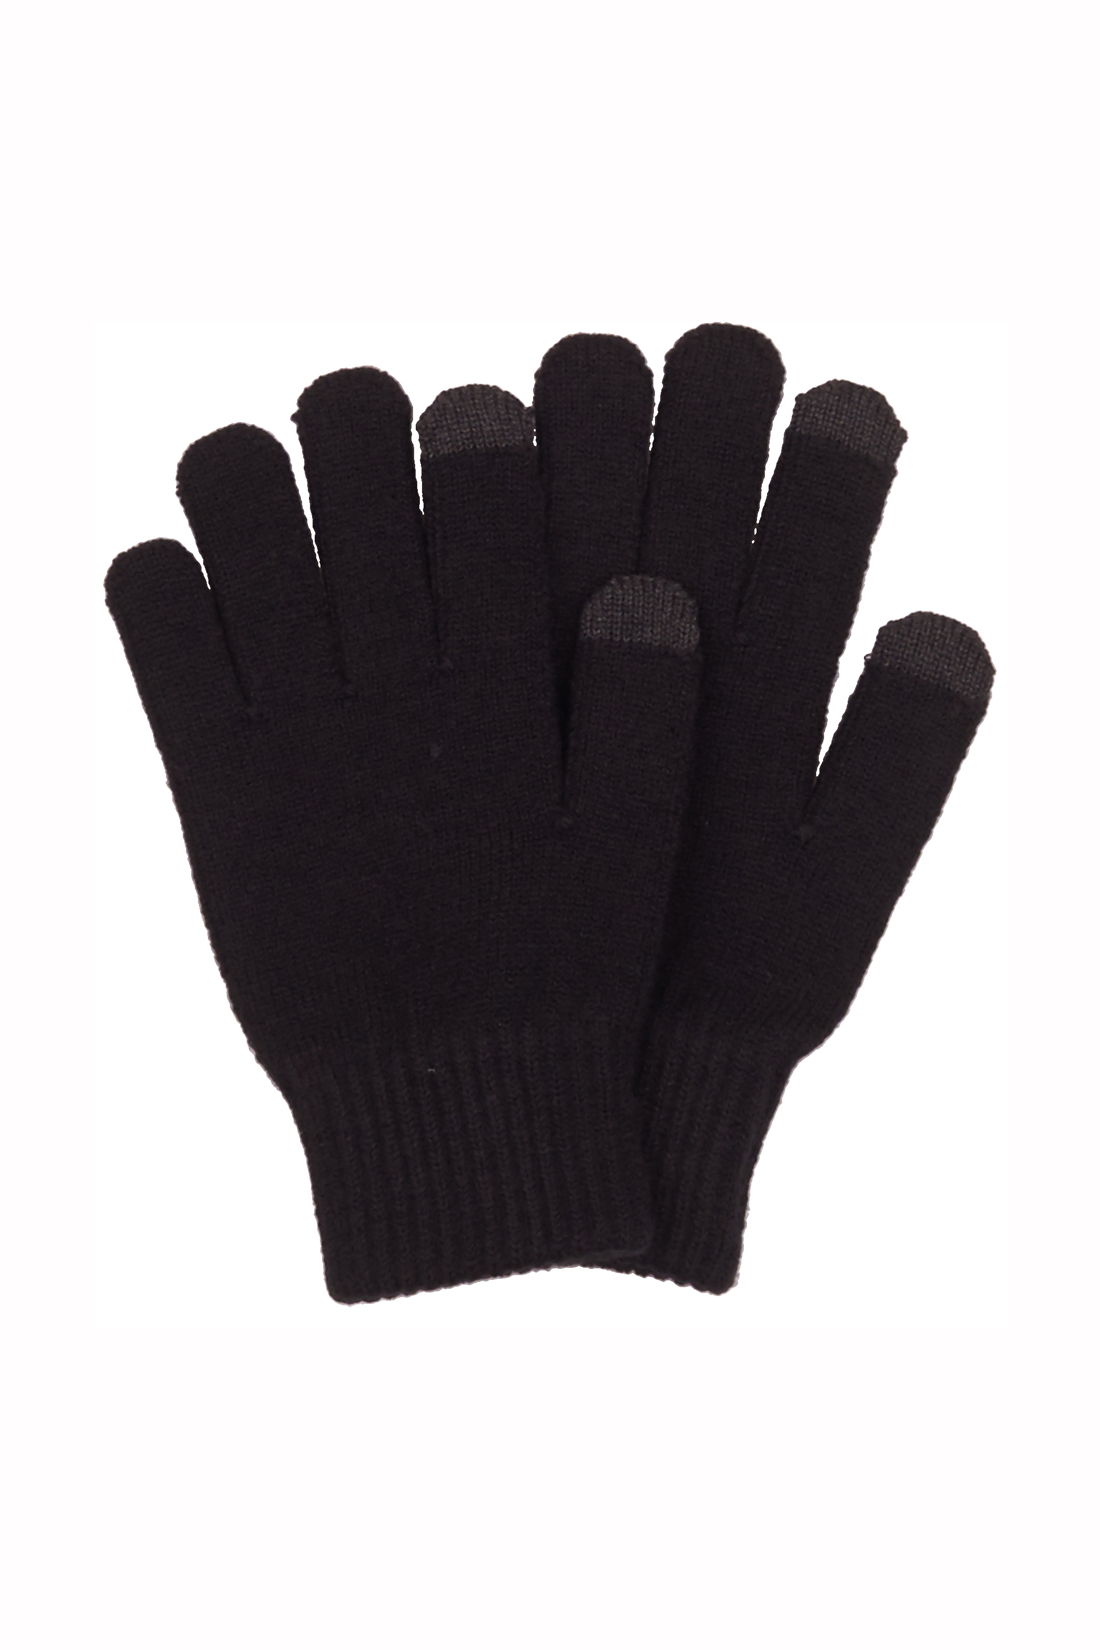 Перчатки (арт. baon B860505), размер Без/раз, цвет черный